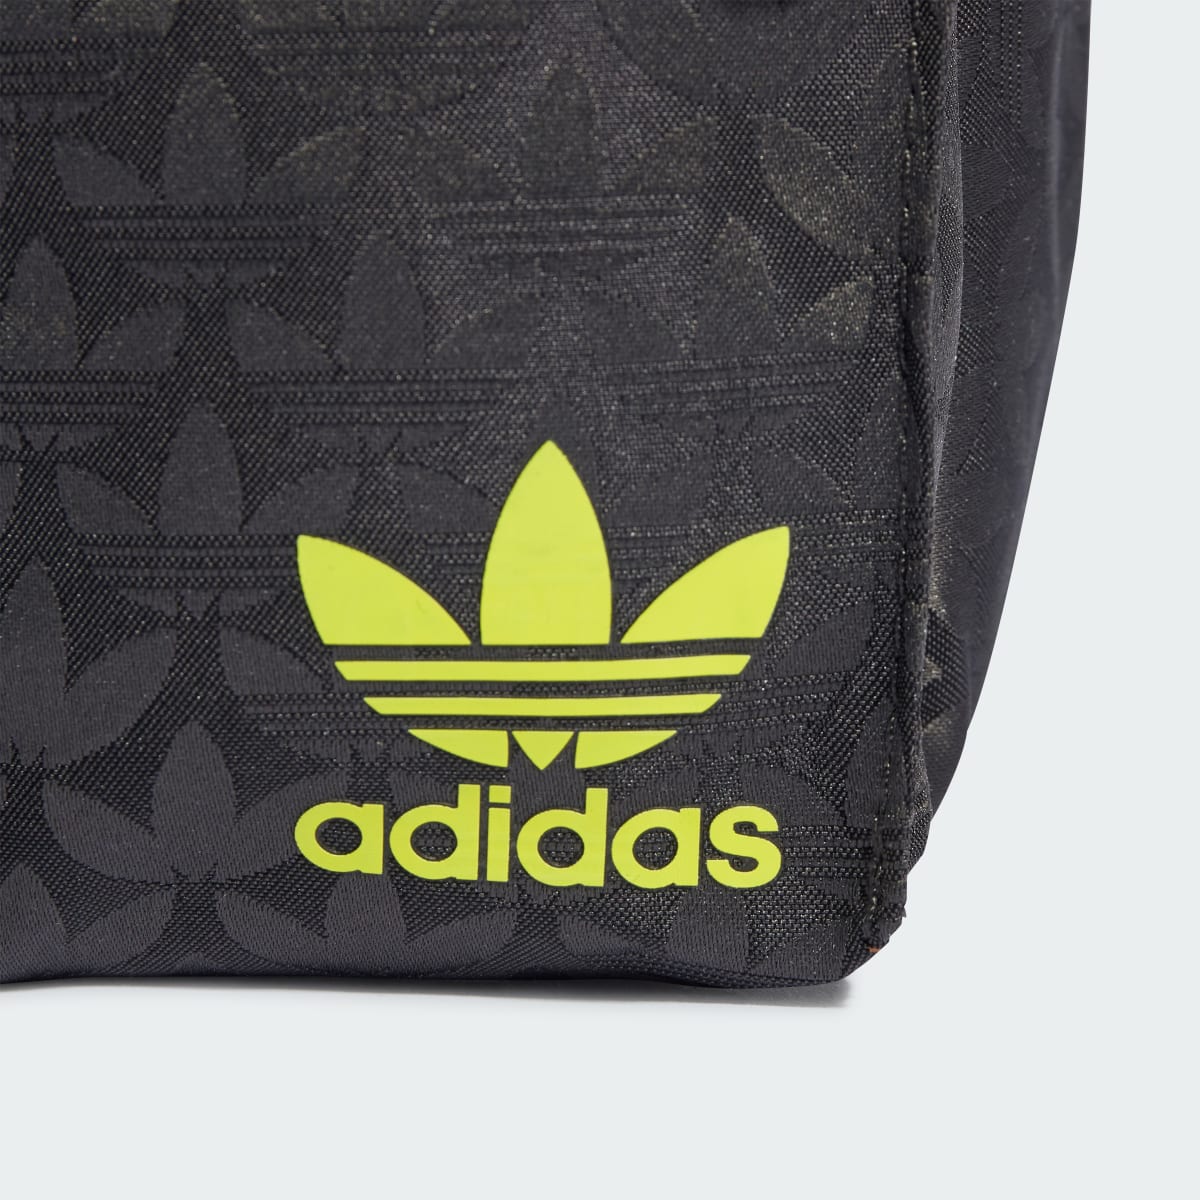 Adidas Trefoil Monogram Jacquard Mini Backpack. 6